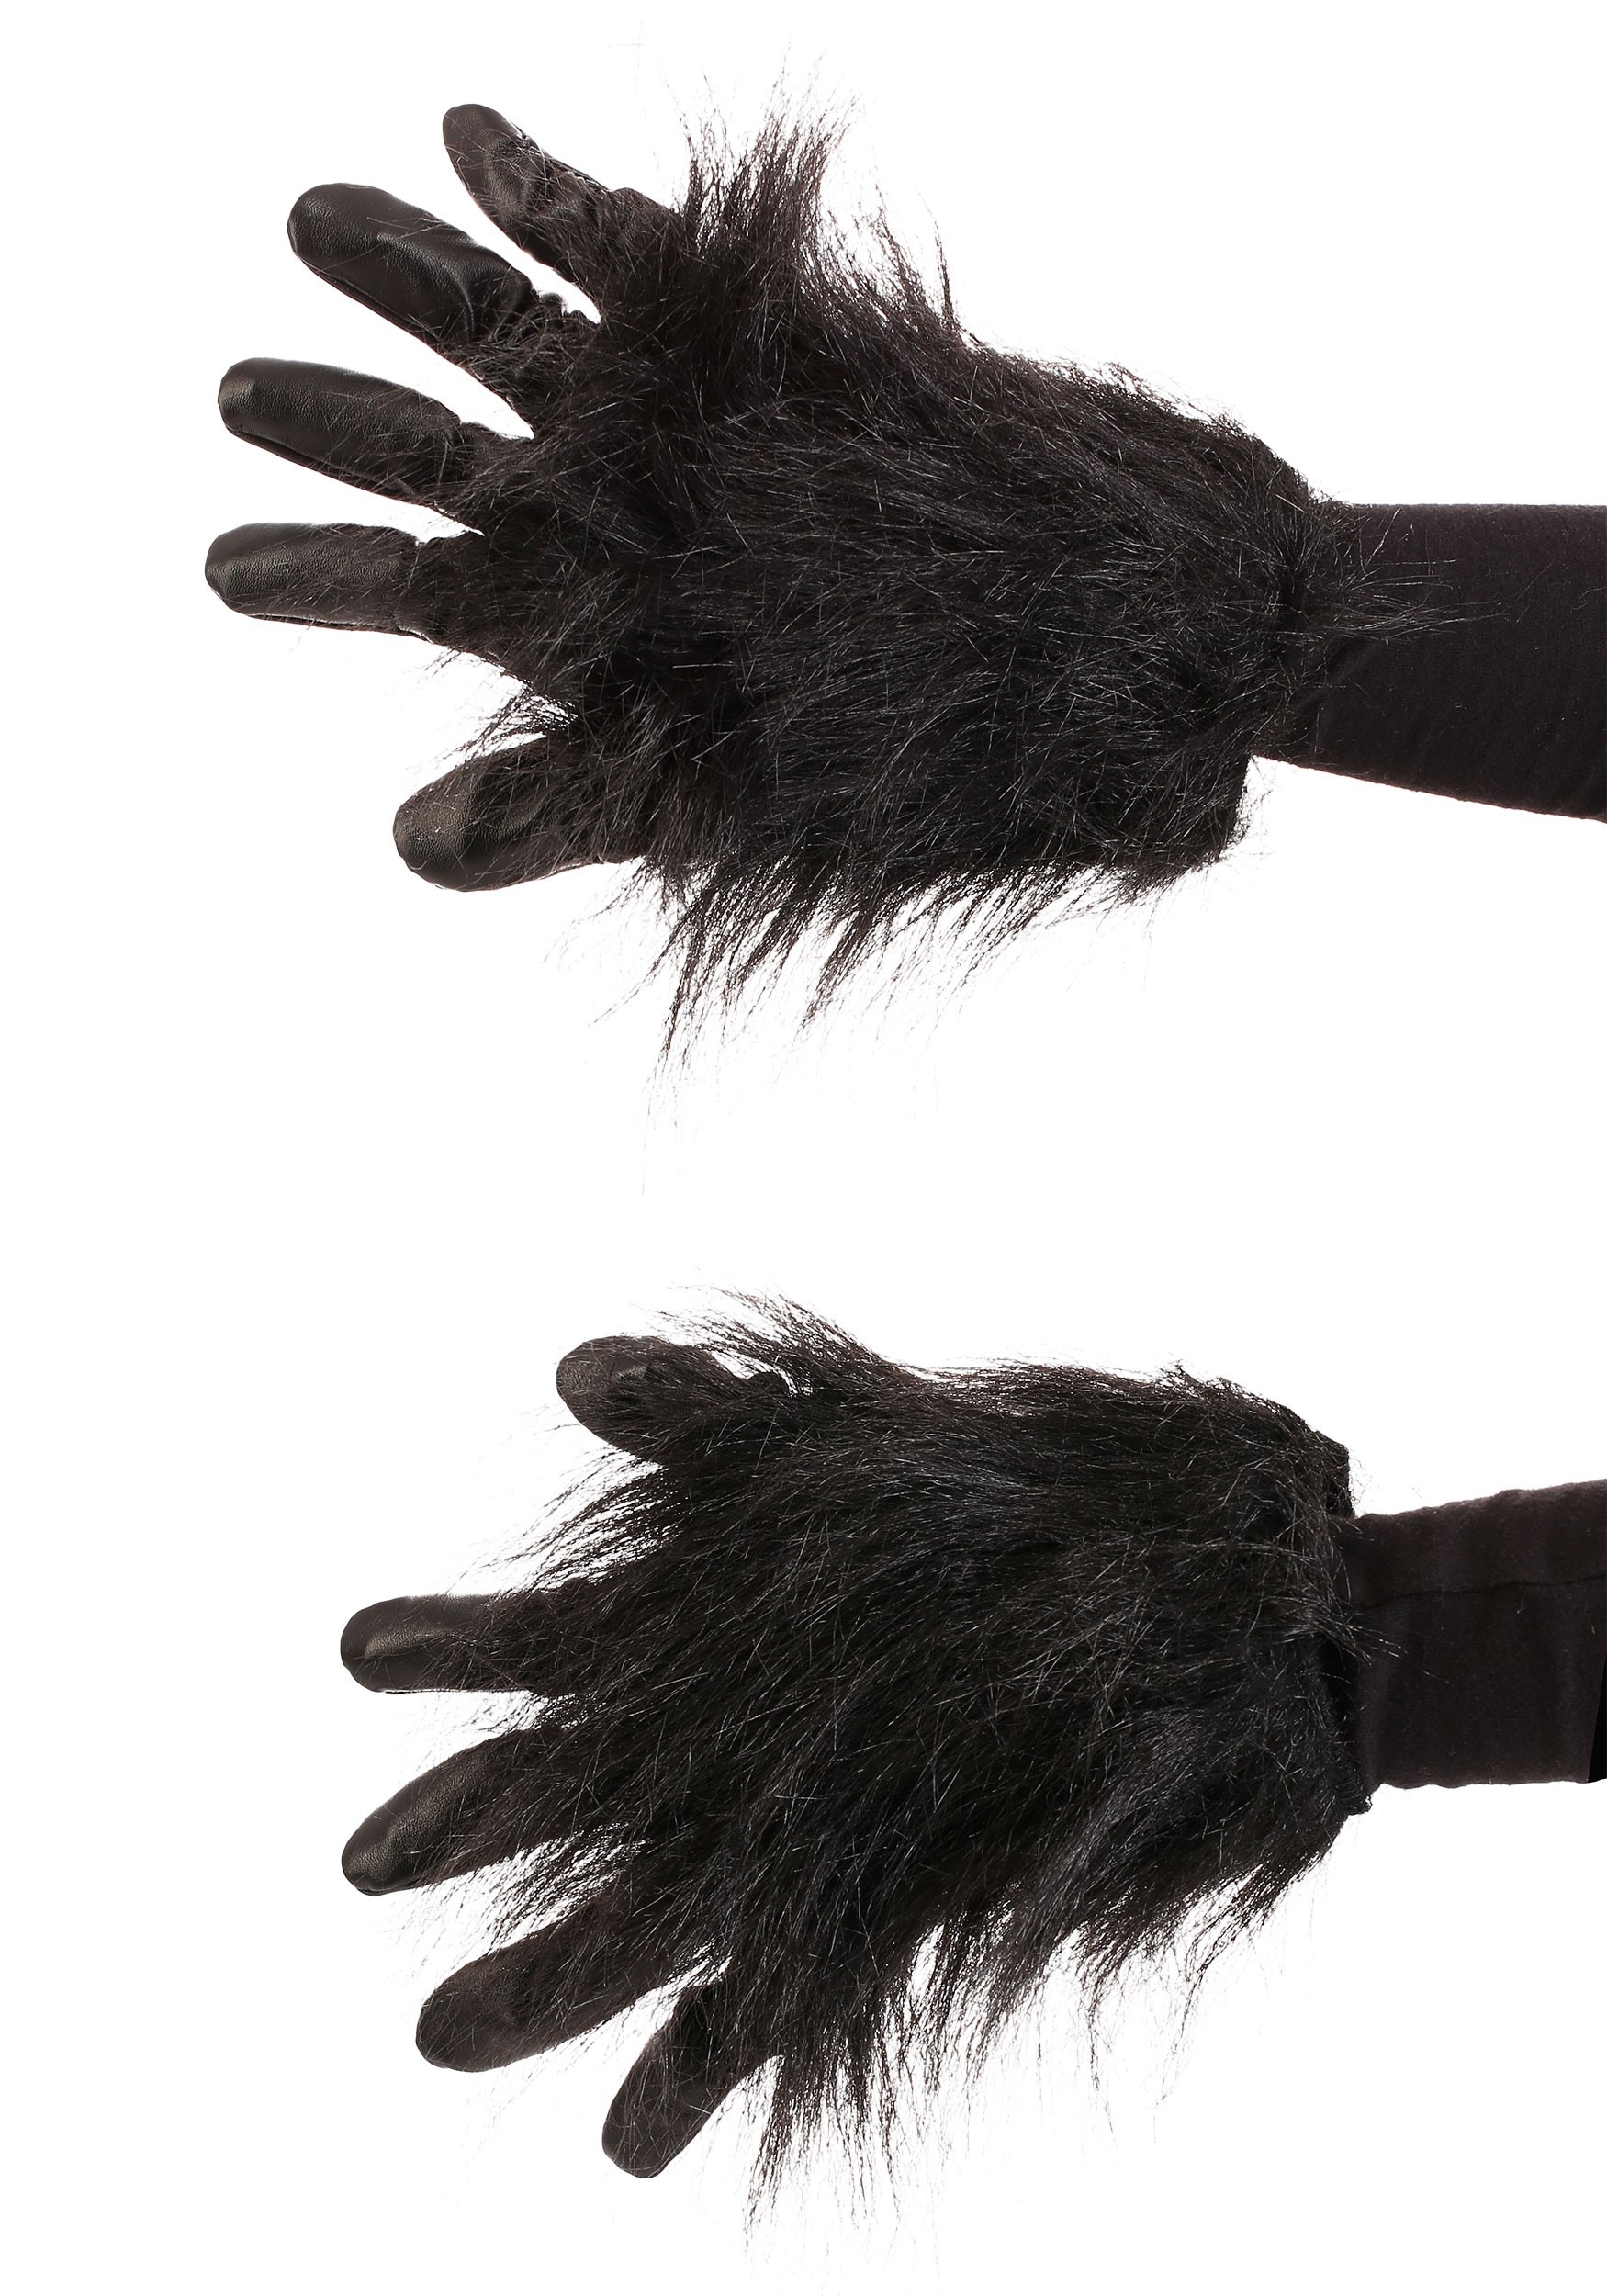 Gorilla Gloves for Children